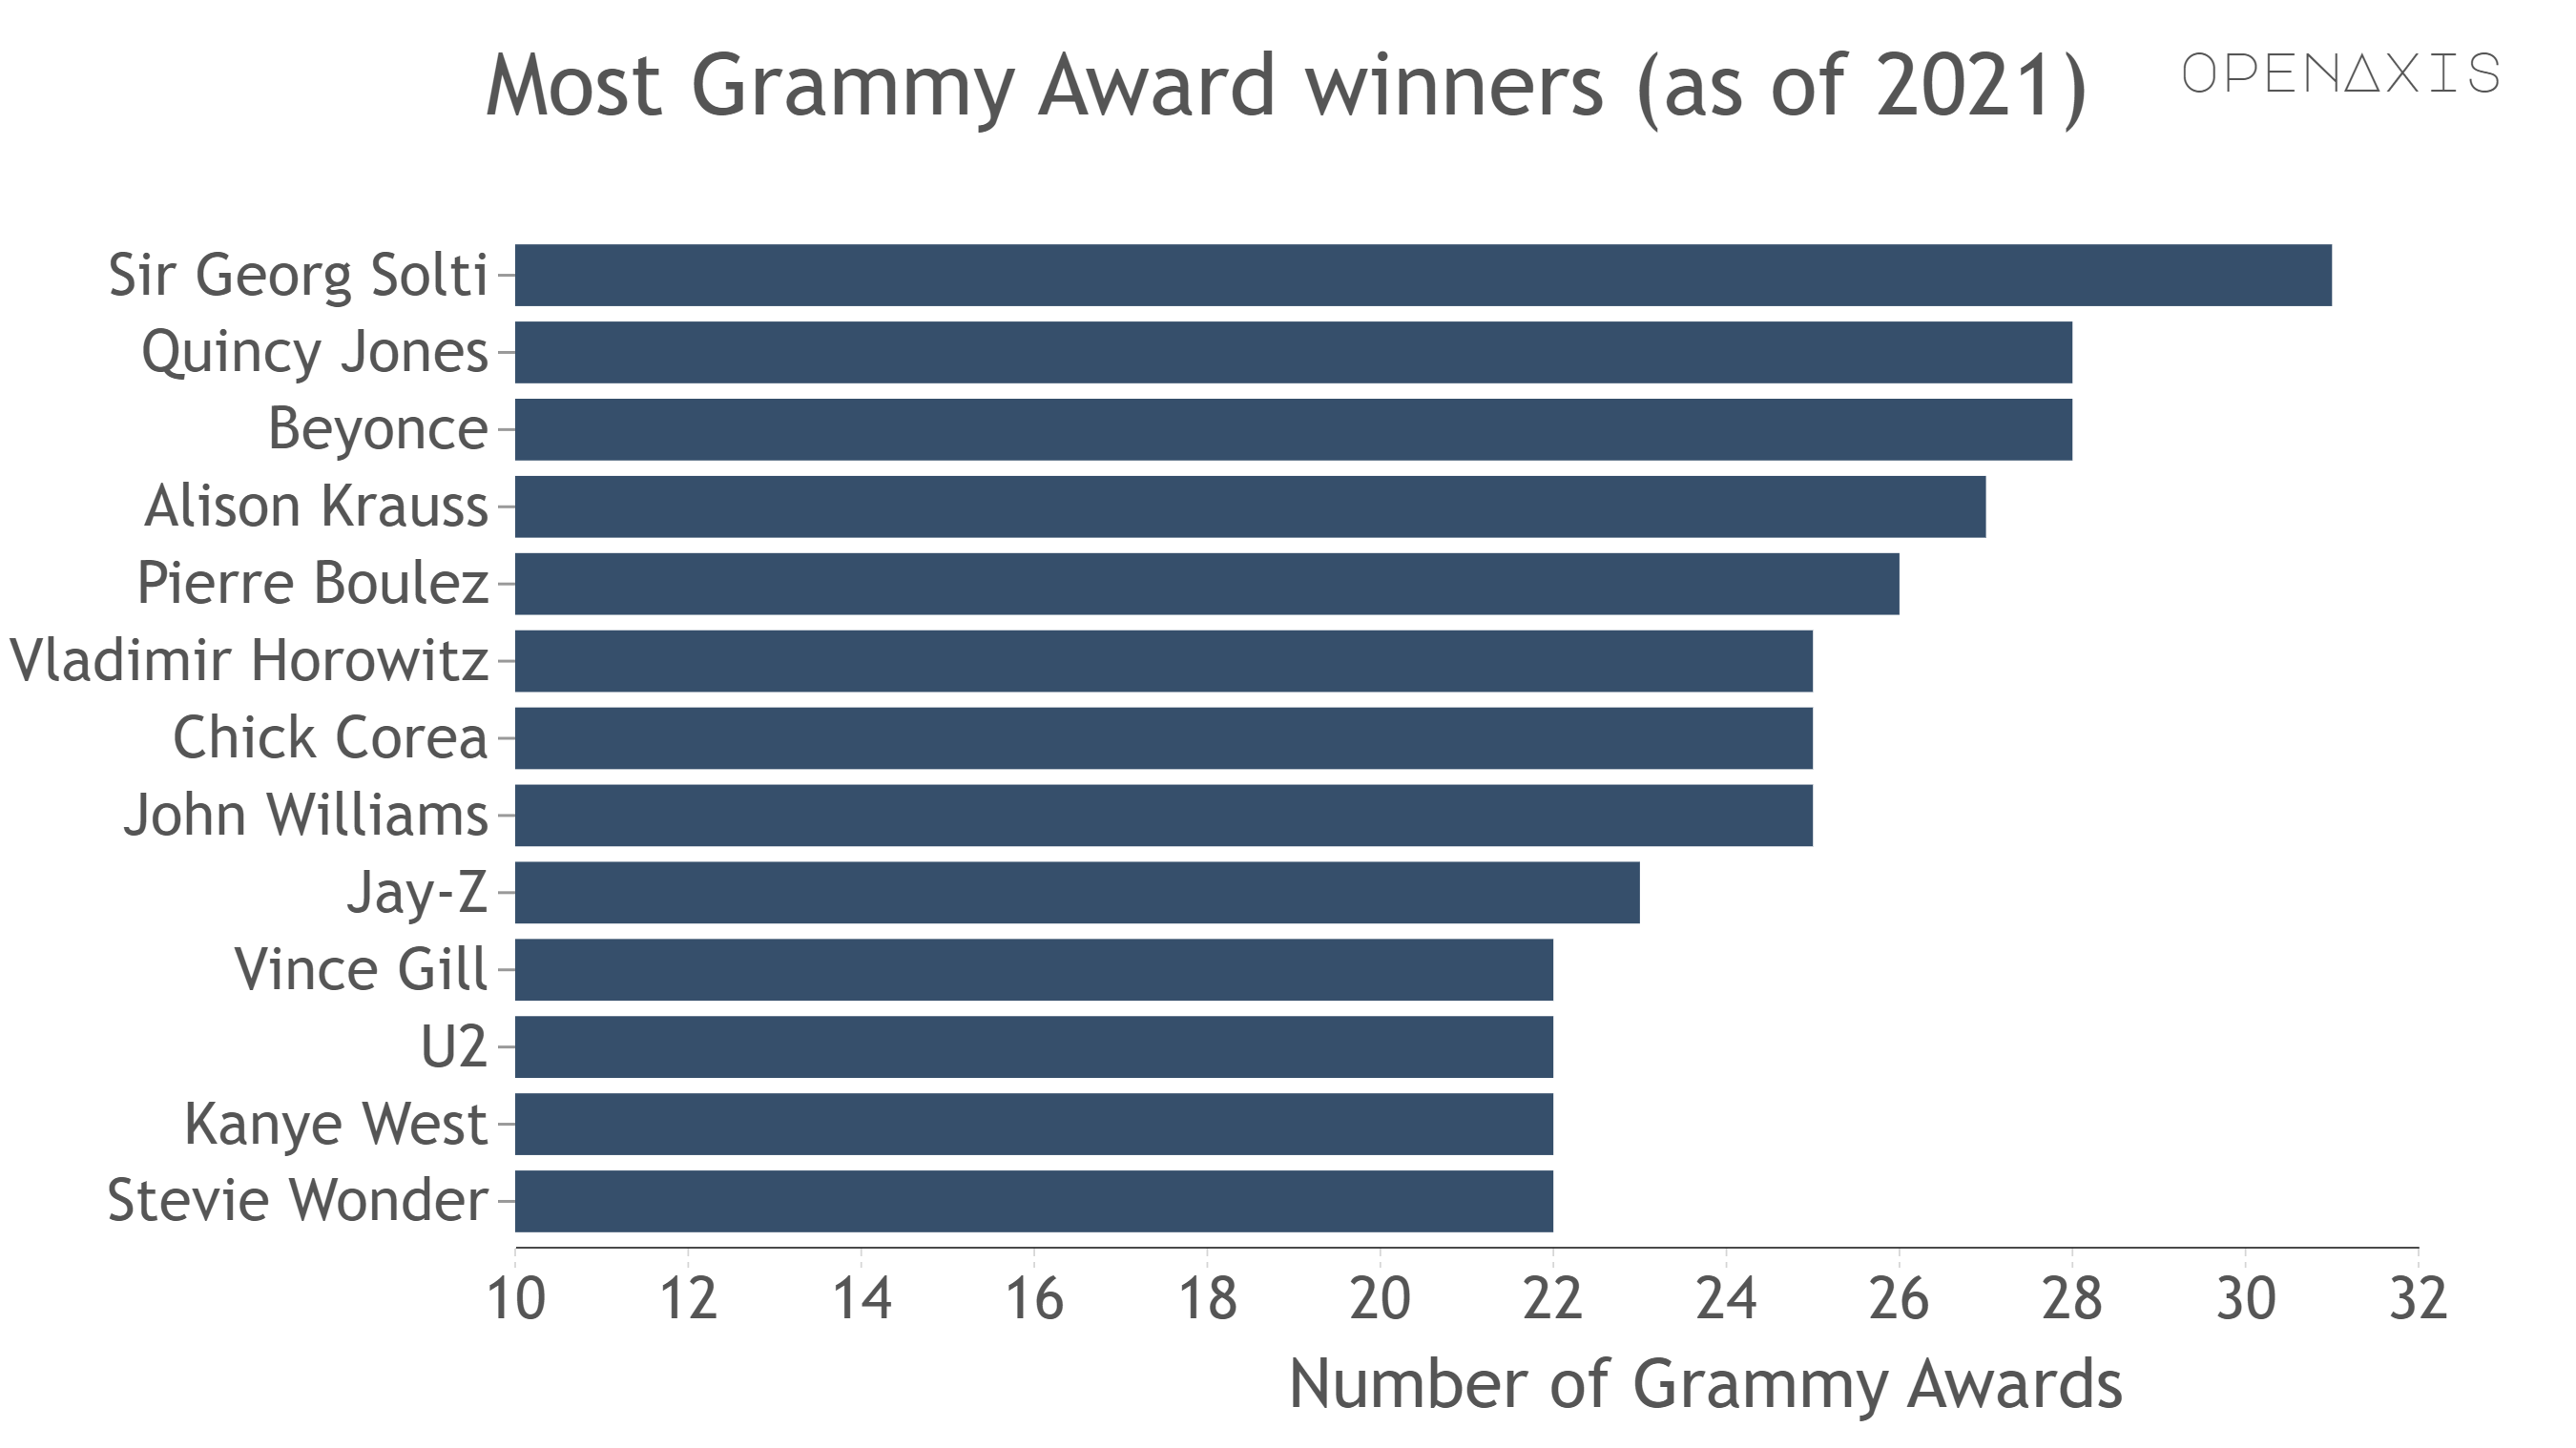 "Most Grammy Award winners (as of 2021)"